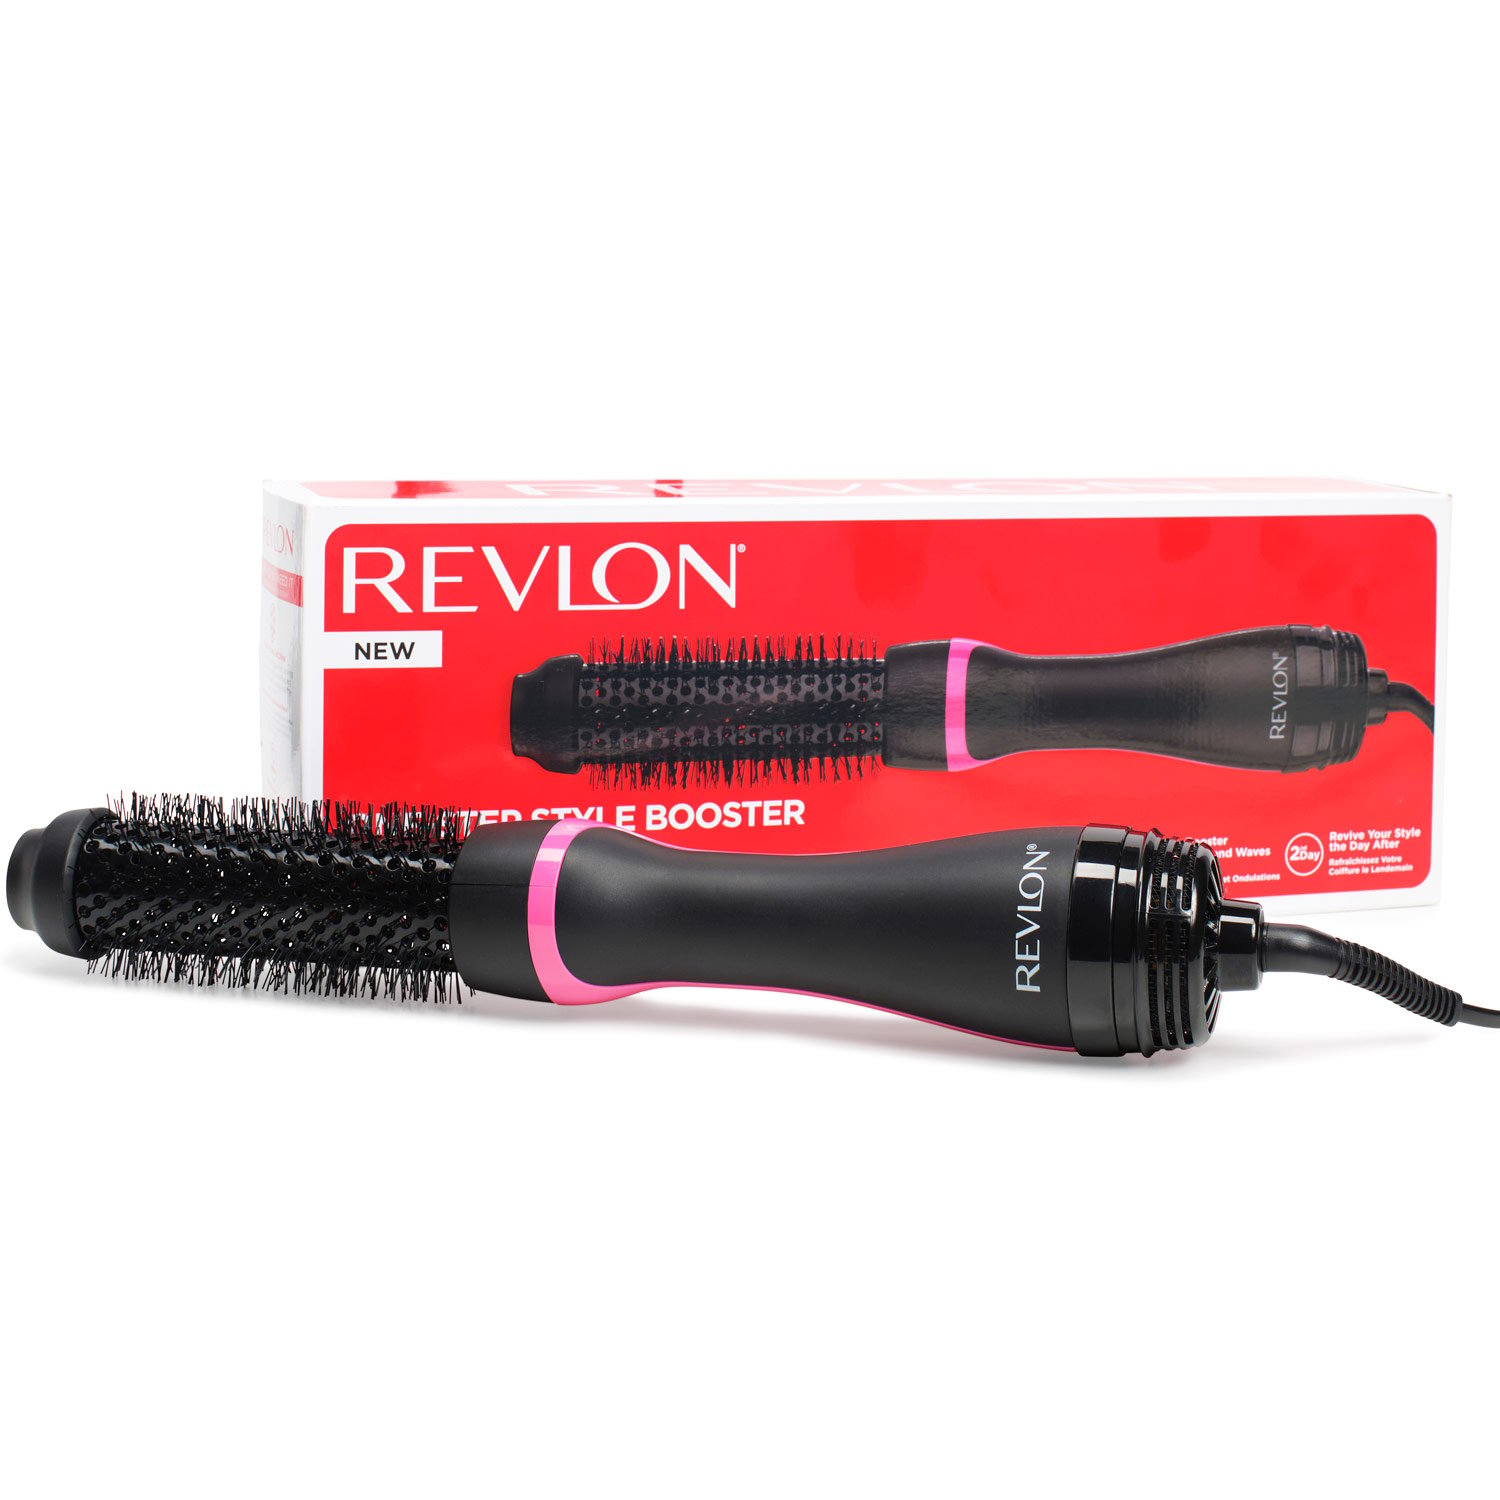 REVLON One-Step Round Brush Dryer & Styler Booster 1st